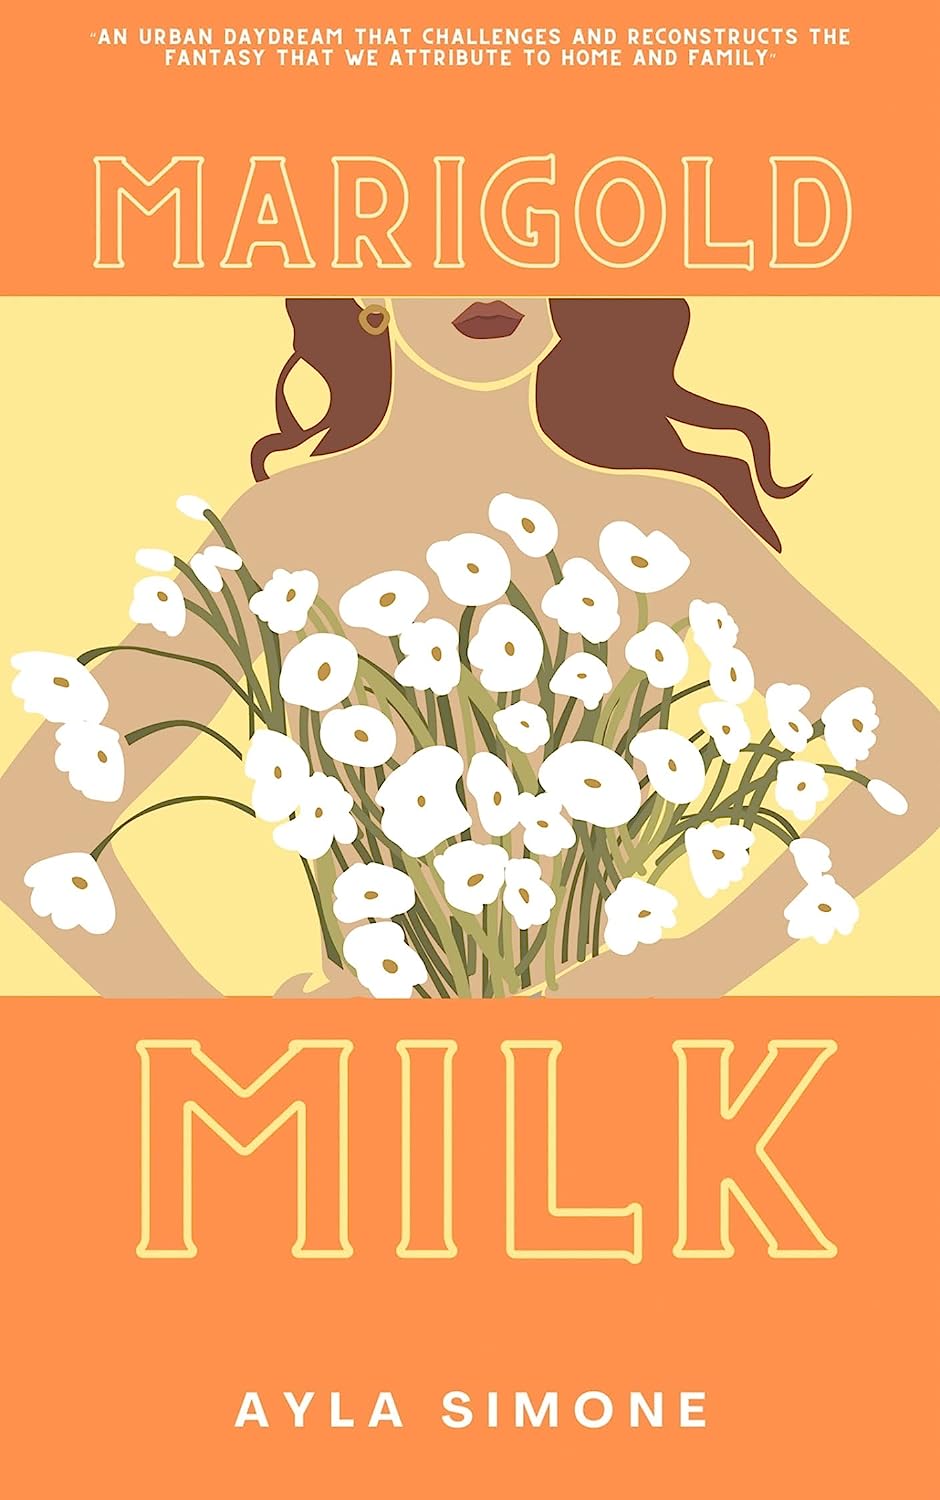 Marigold Milk